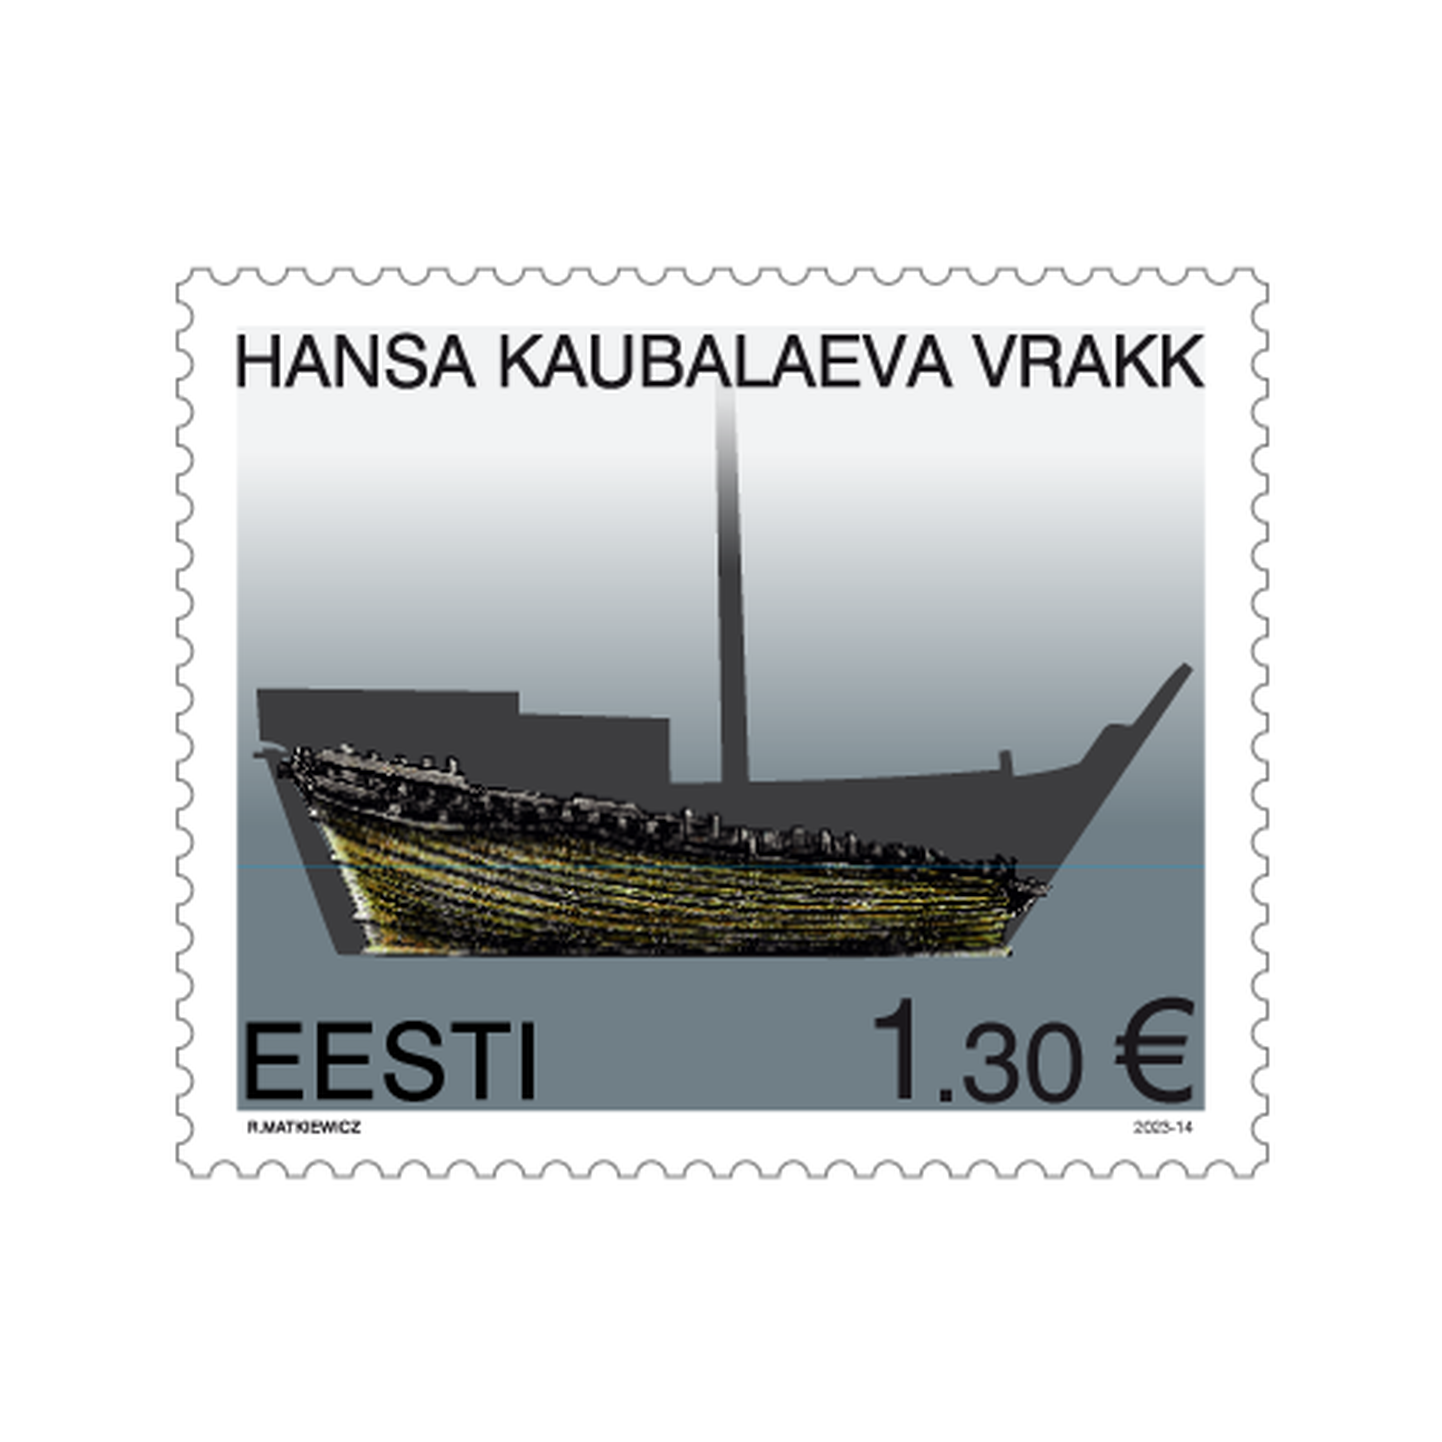 Hansa kaubalaevaga postmark